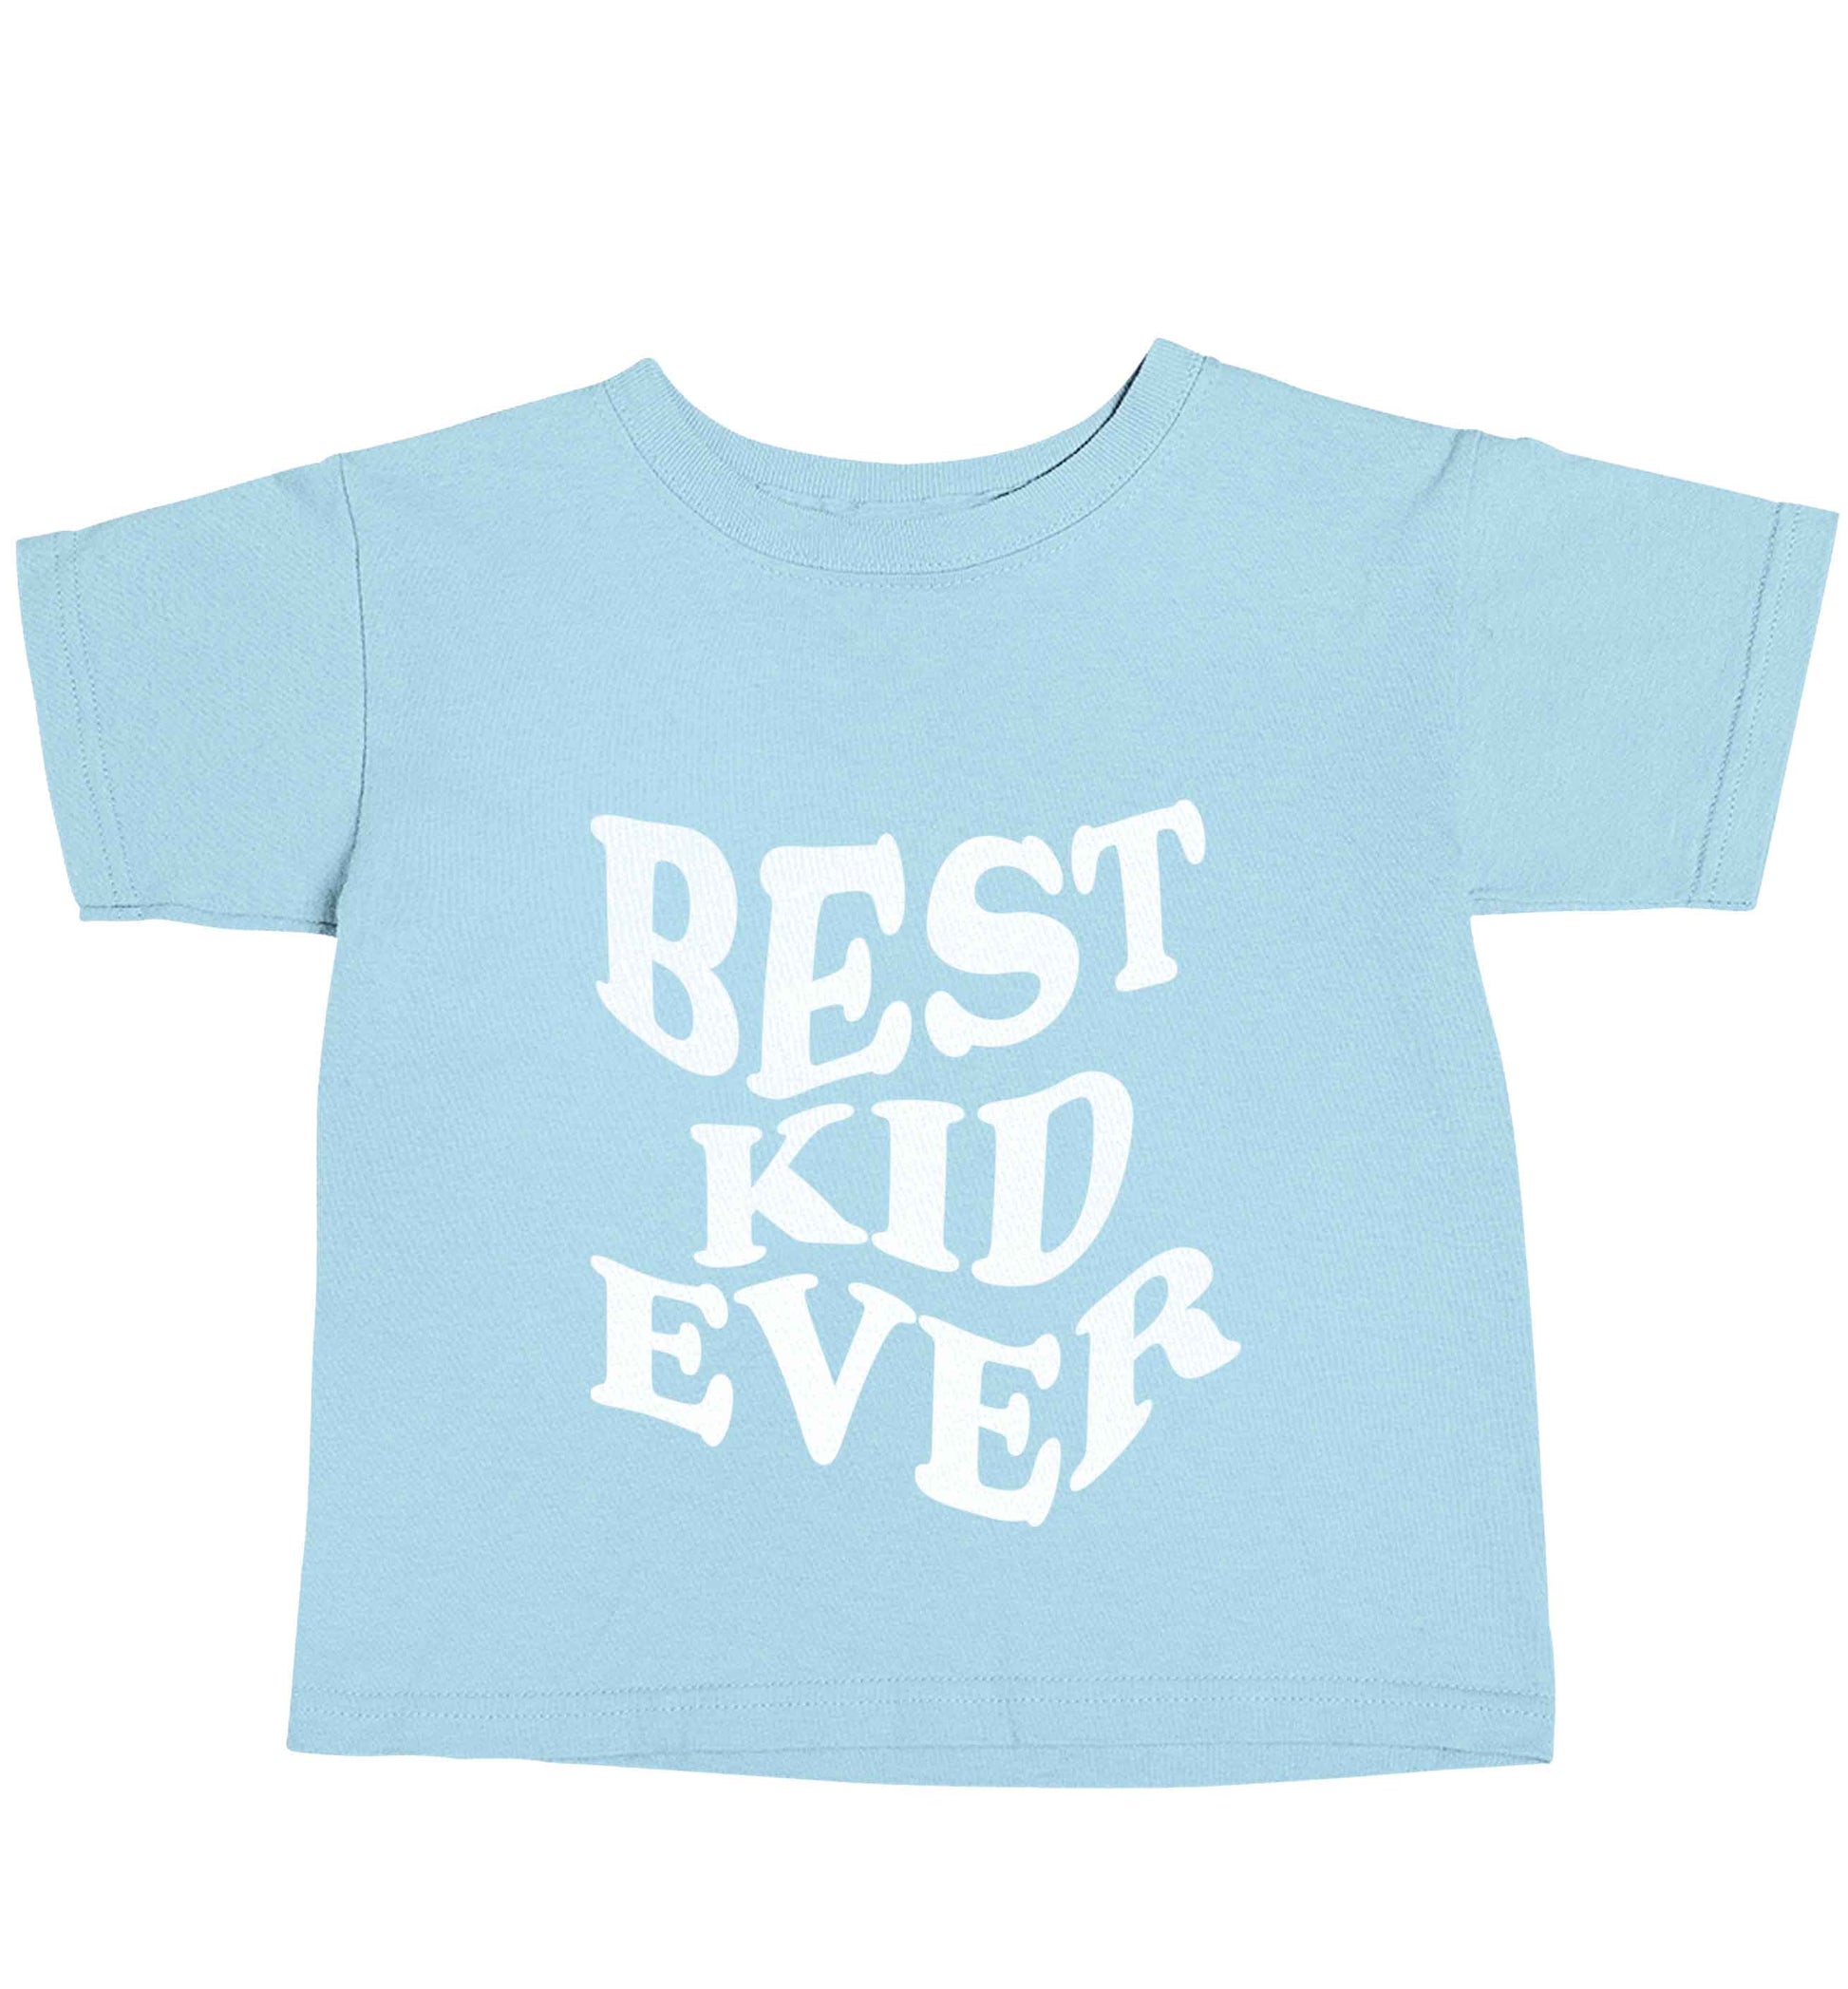 Best kid ever light blue baby toddler Tshirt 2 Years